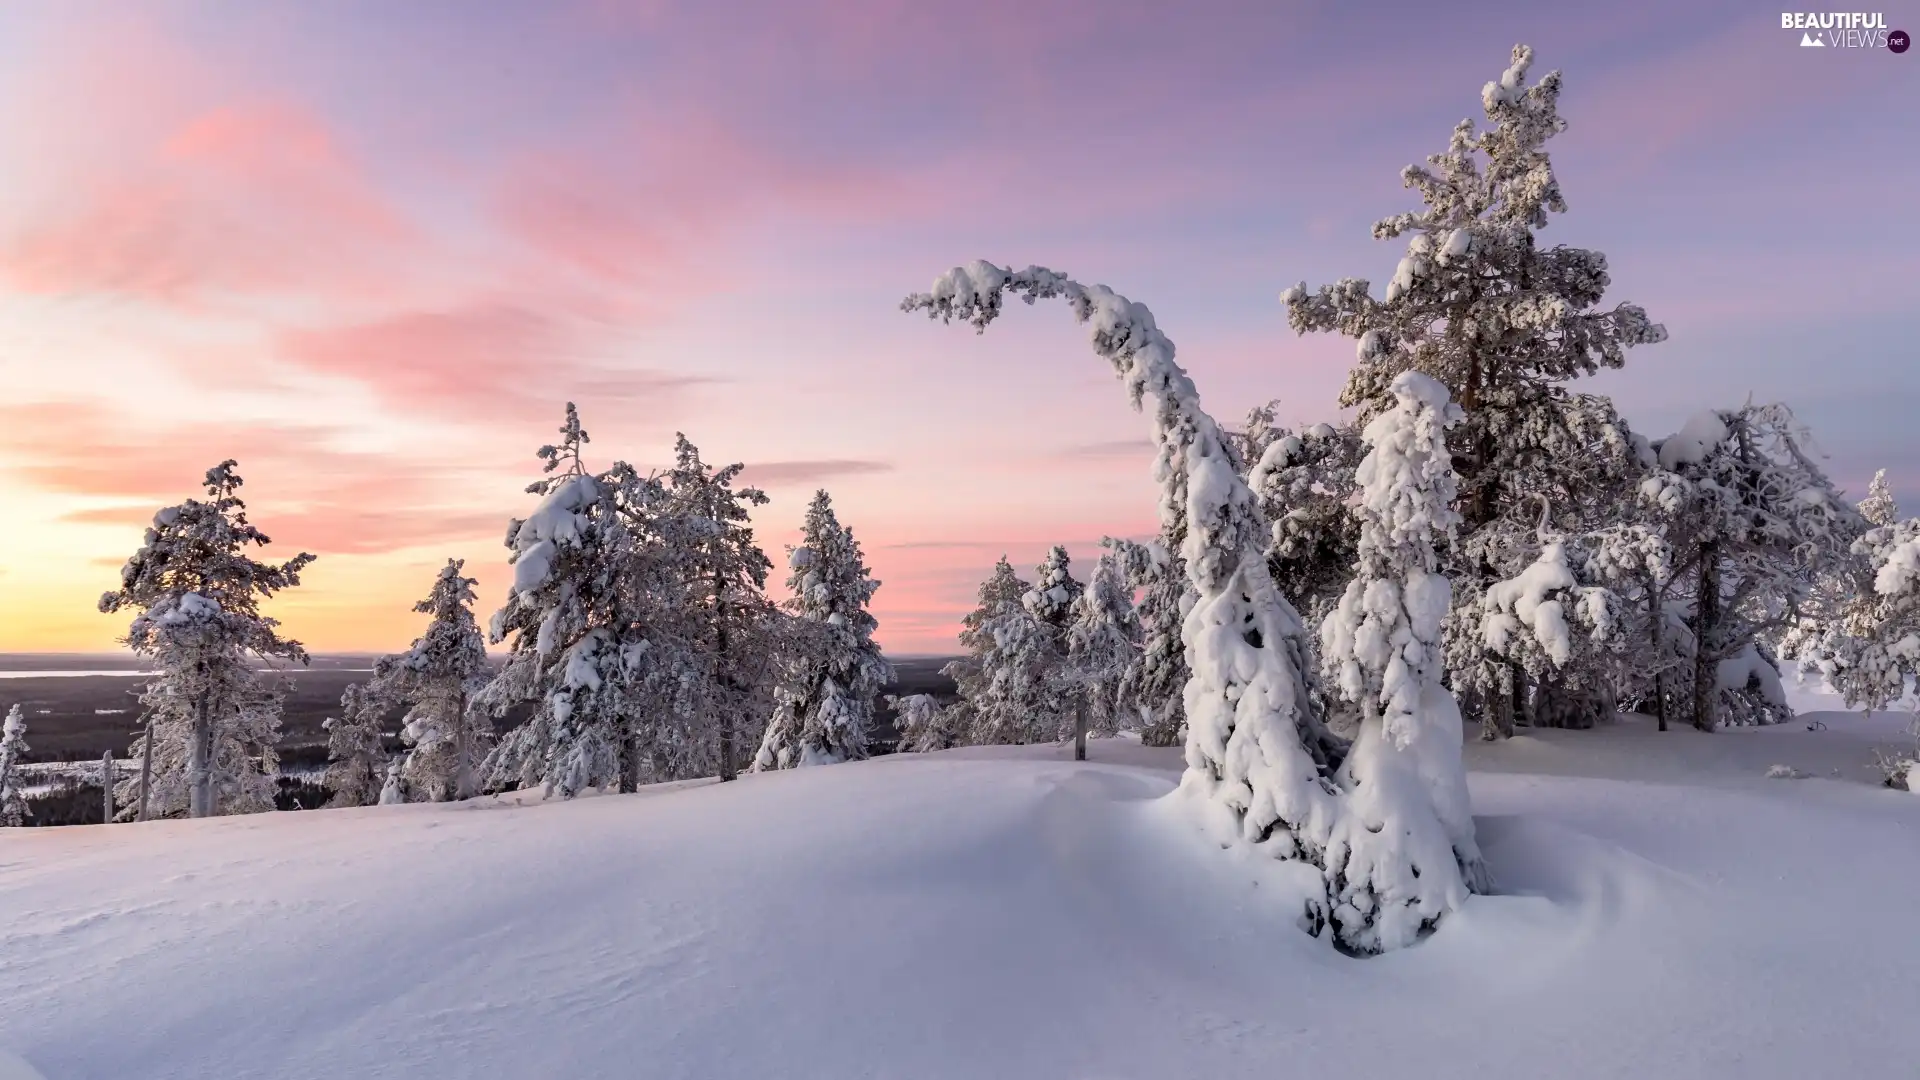 Hill, Lapland, Riisitunturi National Park, trees, Sunrise, Finland, Municipality of Posio, viewes, Snowy, winter